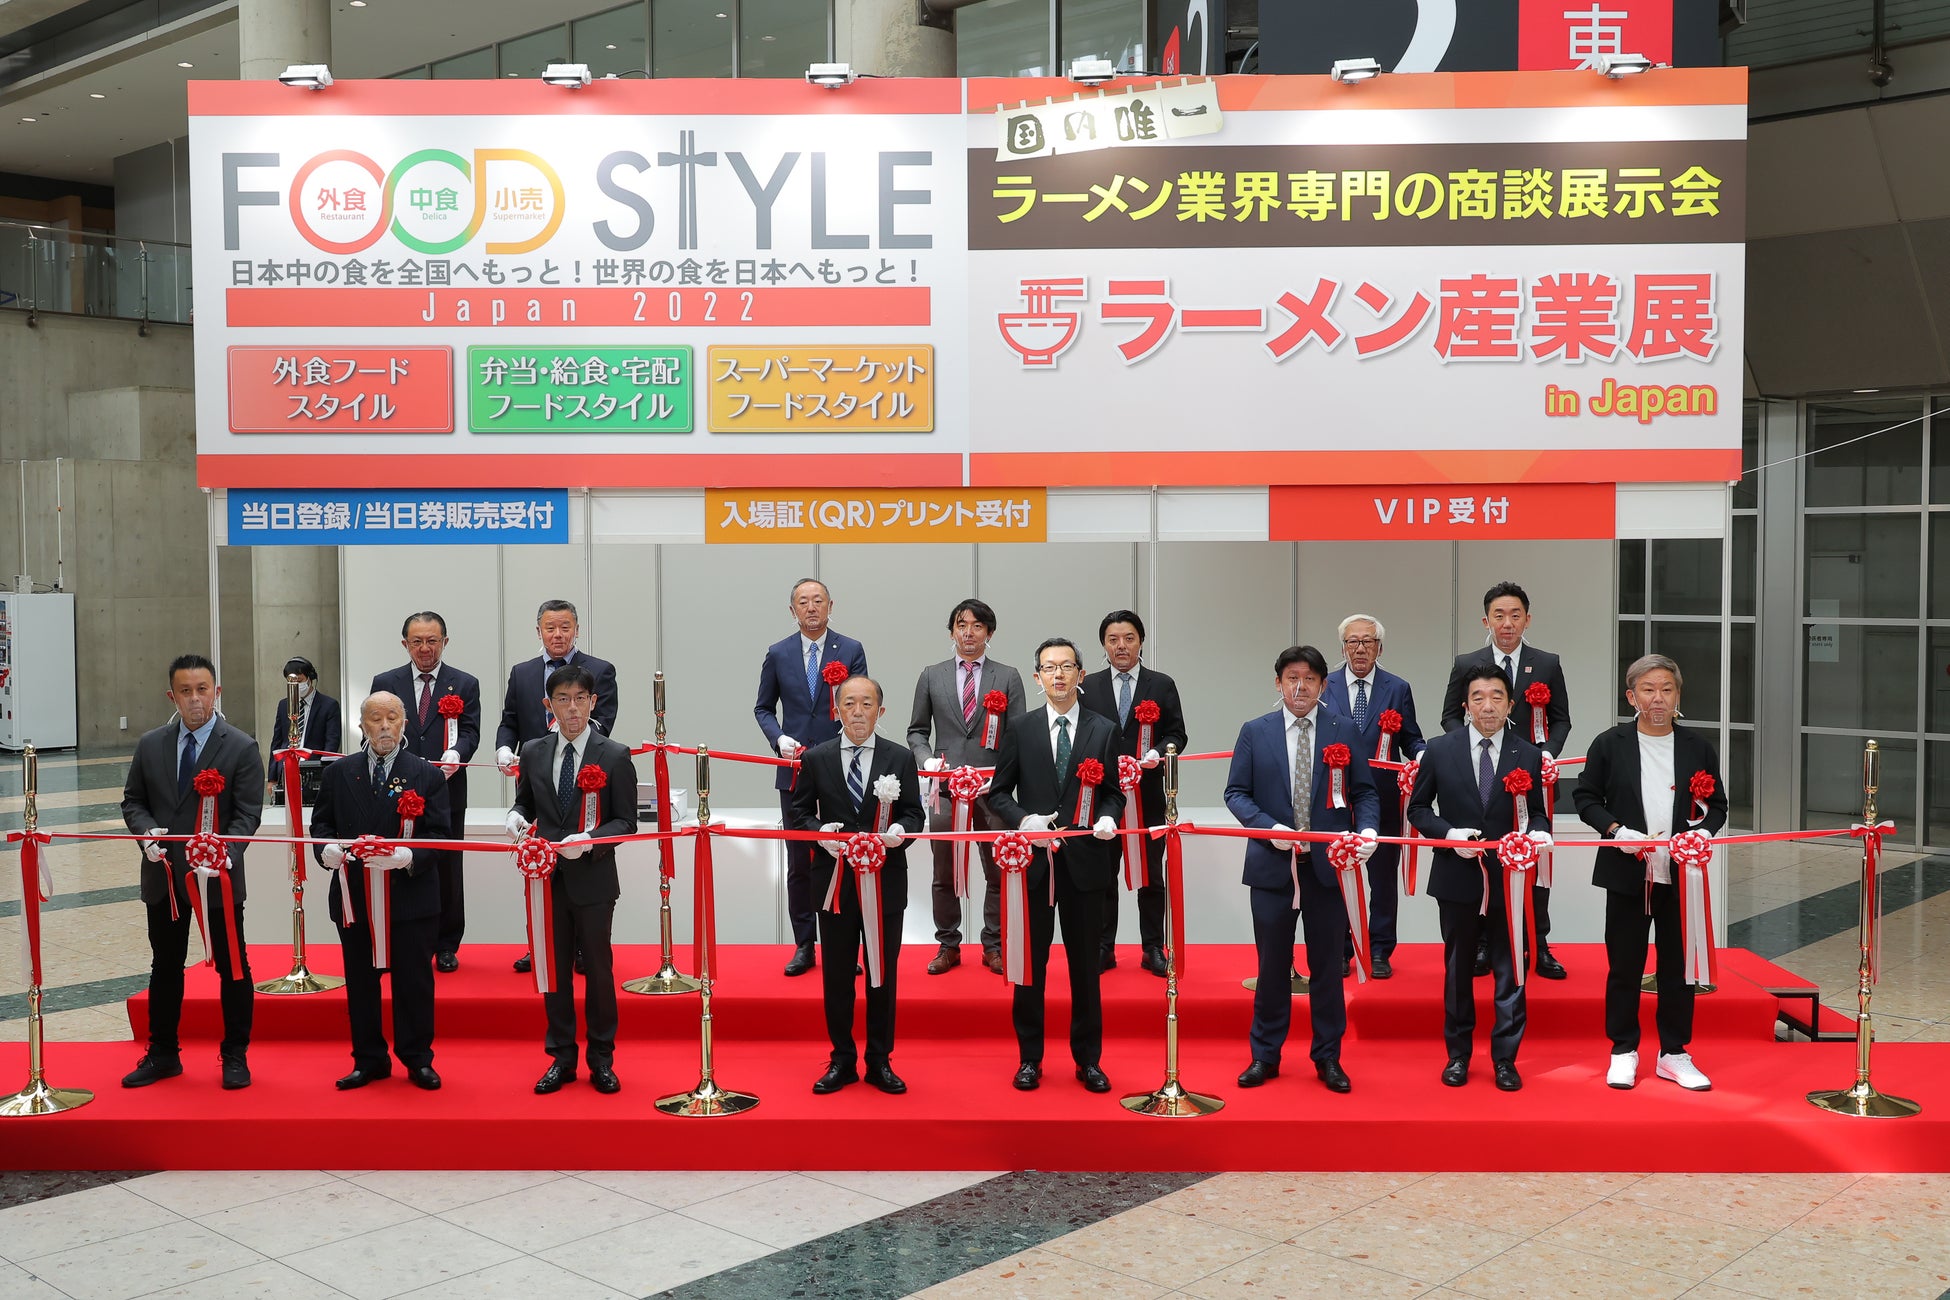 FOOD STYLE Japan 2023／ラーメン産業展 in Japan、昨年より規模を拡大して開催！初日の9月13日にはオープニングセレモニーを実施。